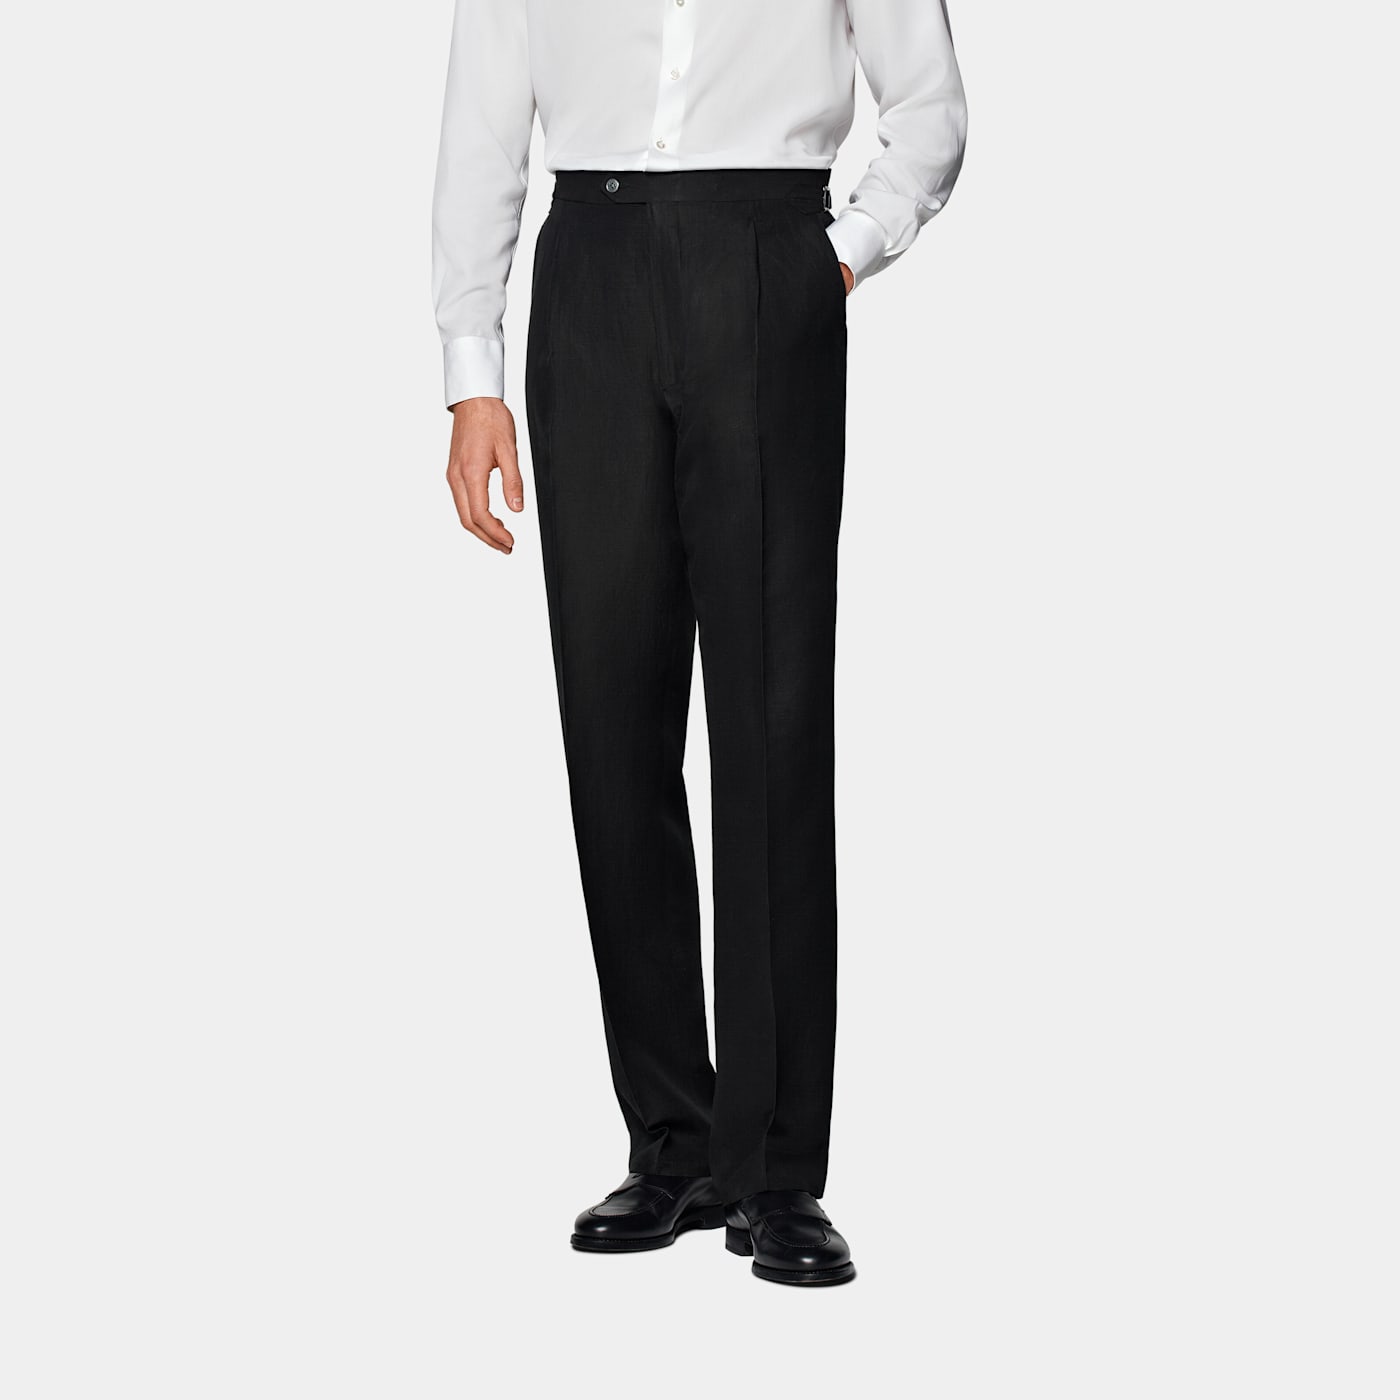 Shop Suitsupply Black Wide Leg Straight Pants